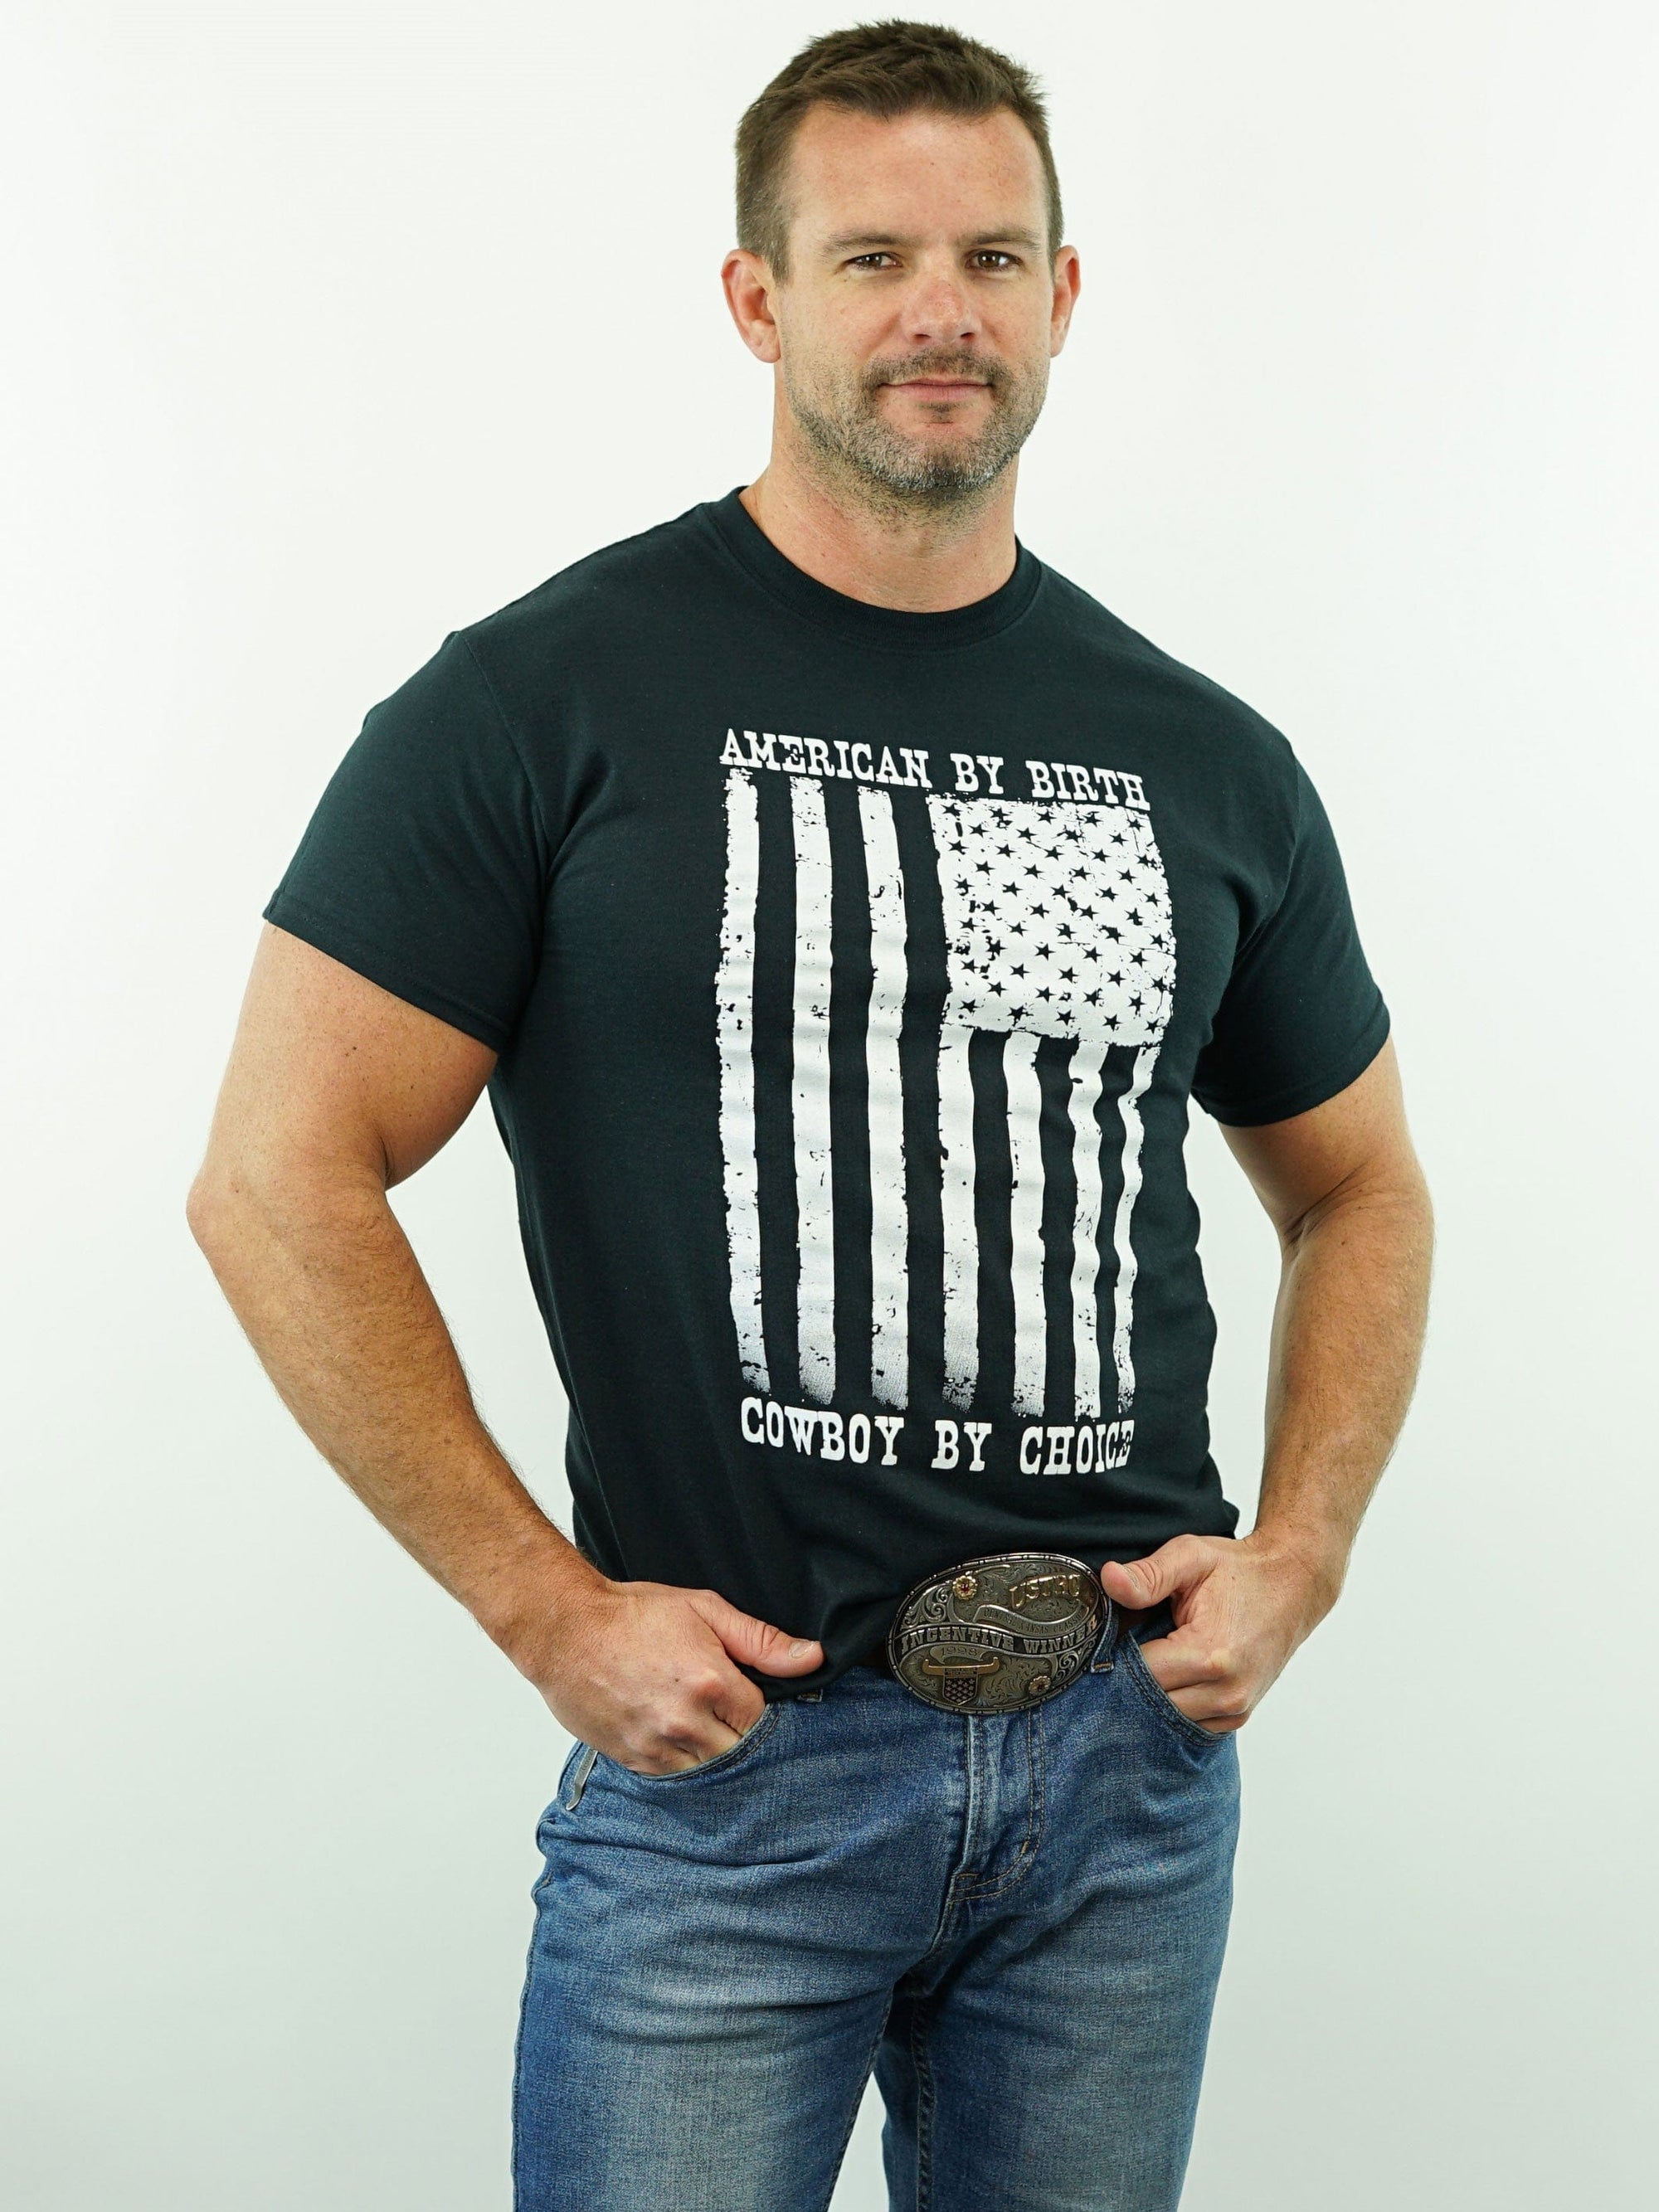 Drover Cowboy Threads Shirts T-Shirt - American By Birth, Cowboy By Choice - Black